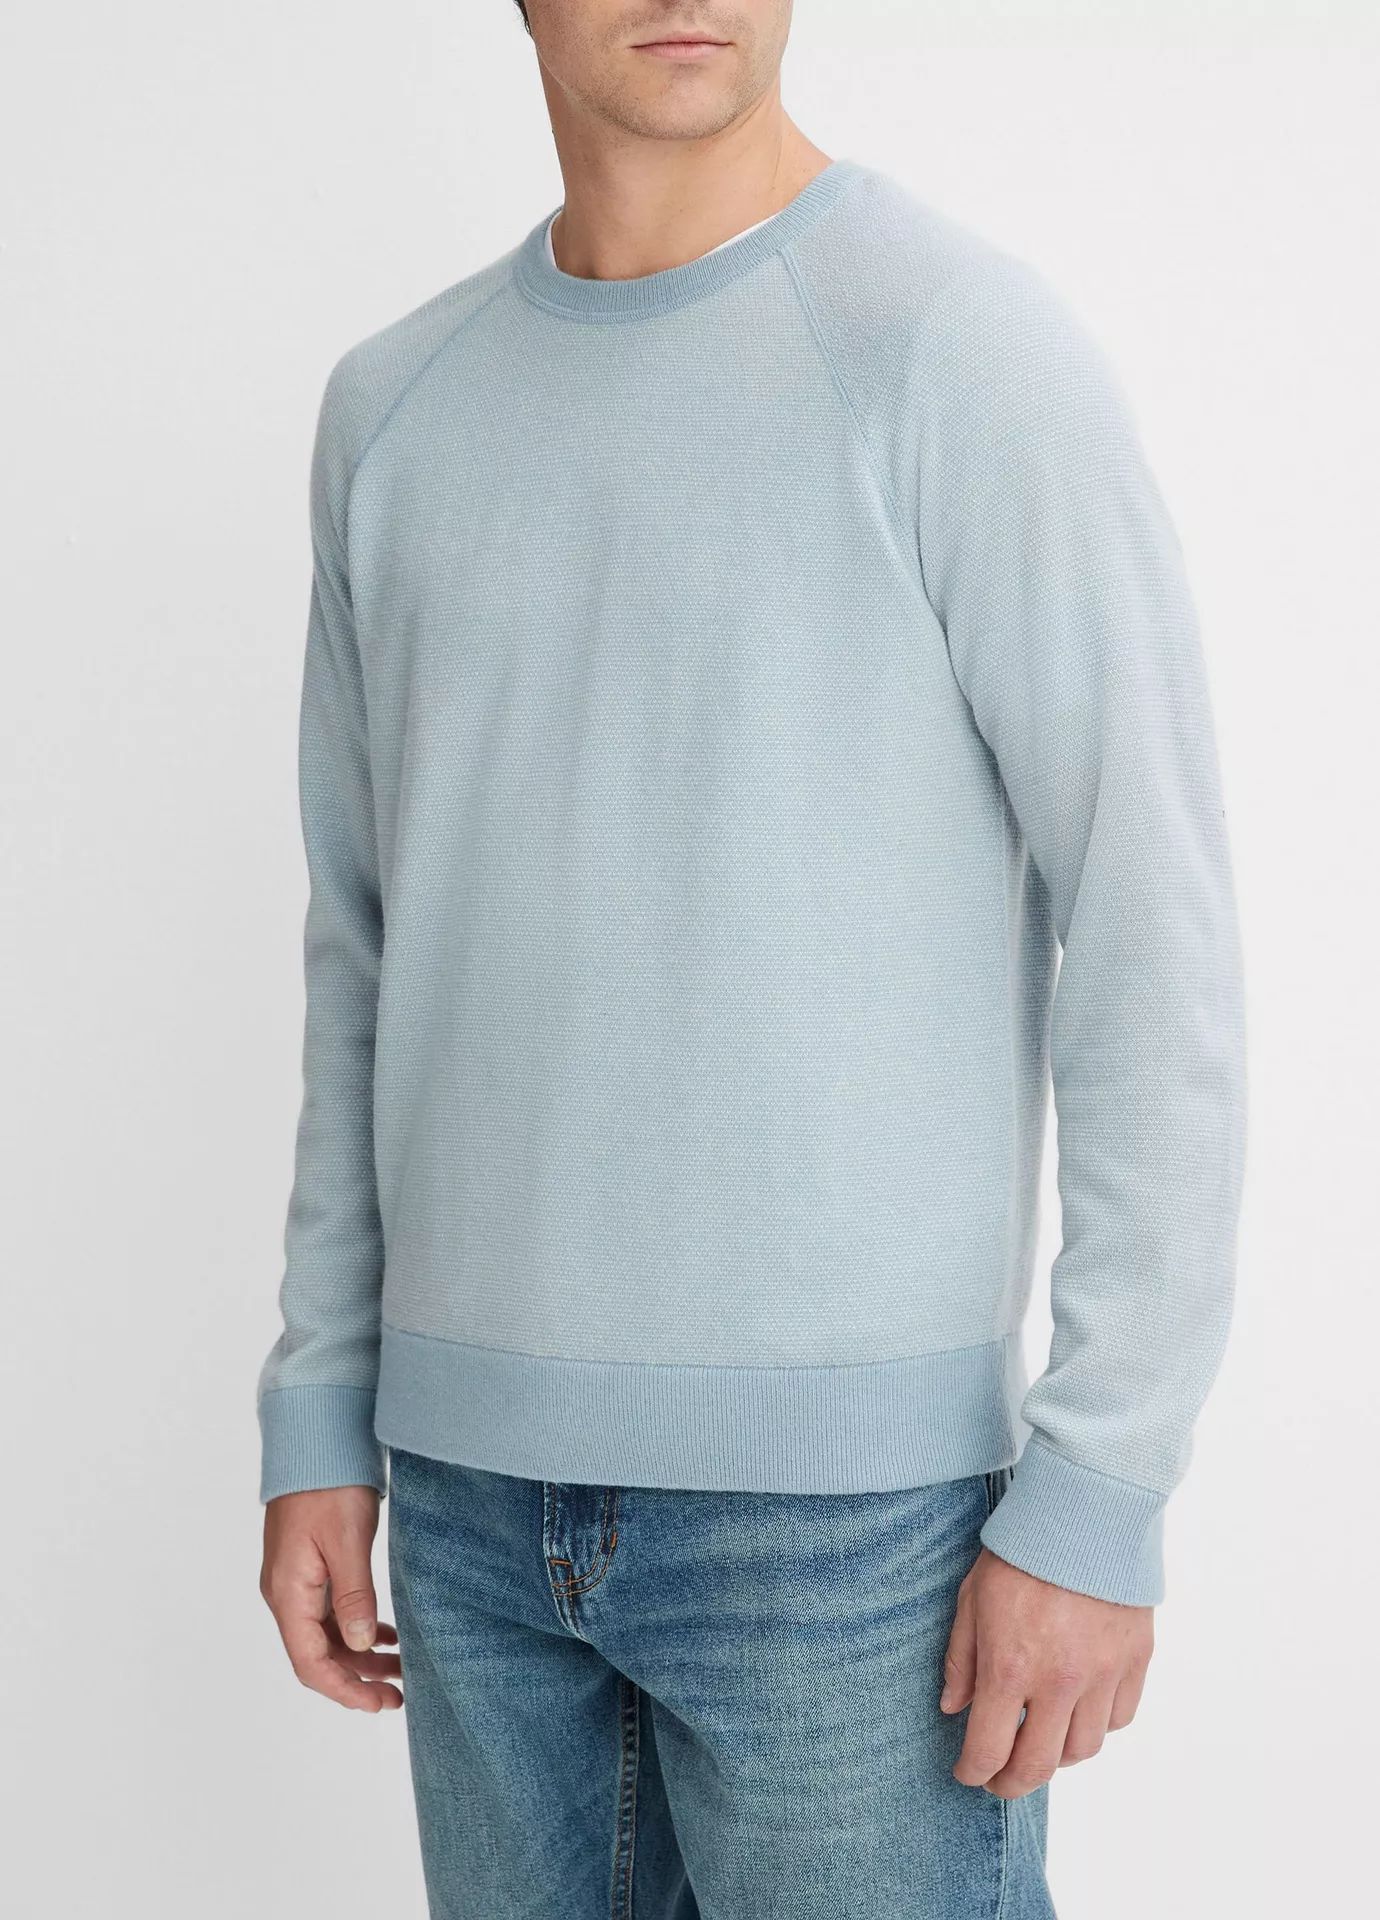 Birdseye Raglan Sweater | Vince LLC